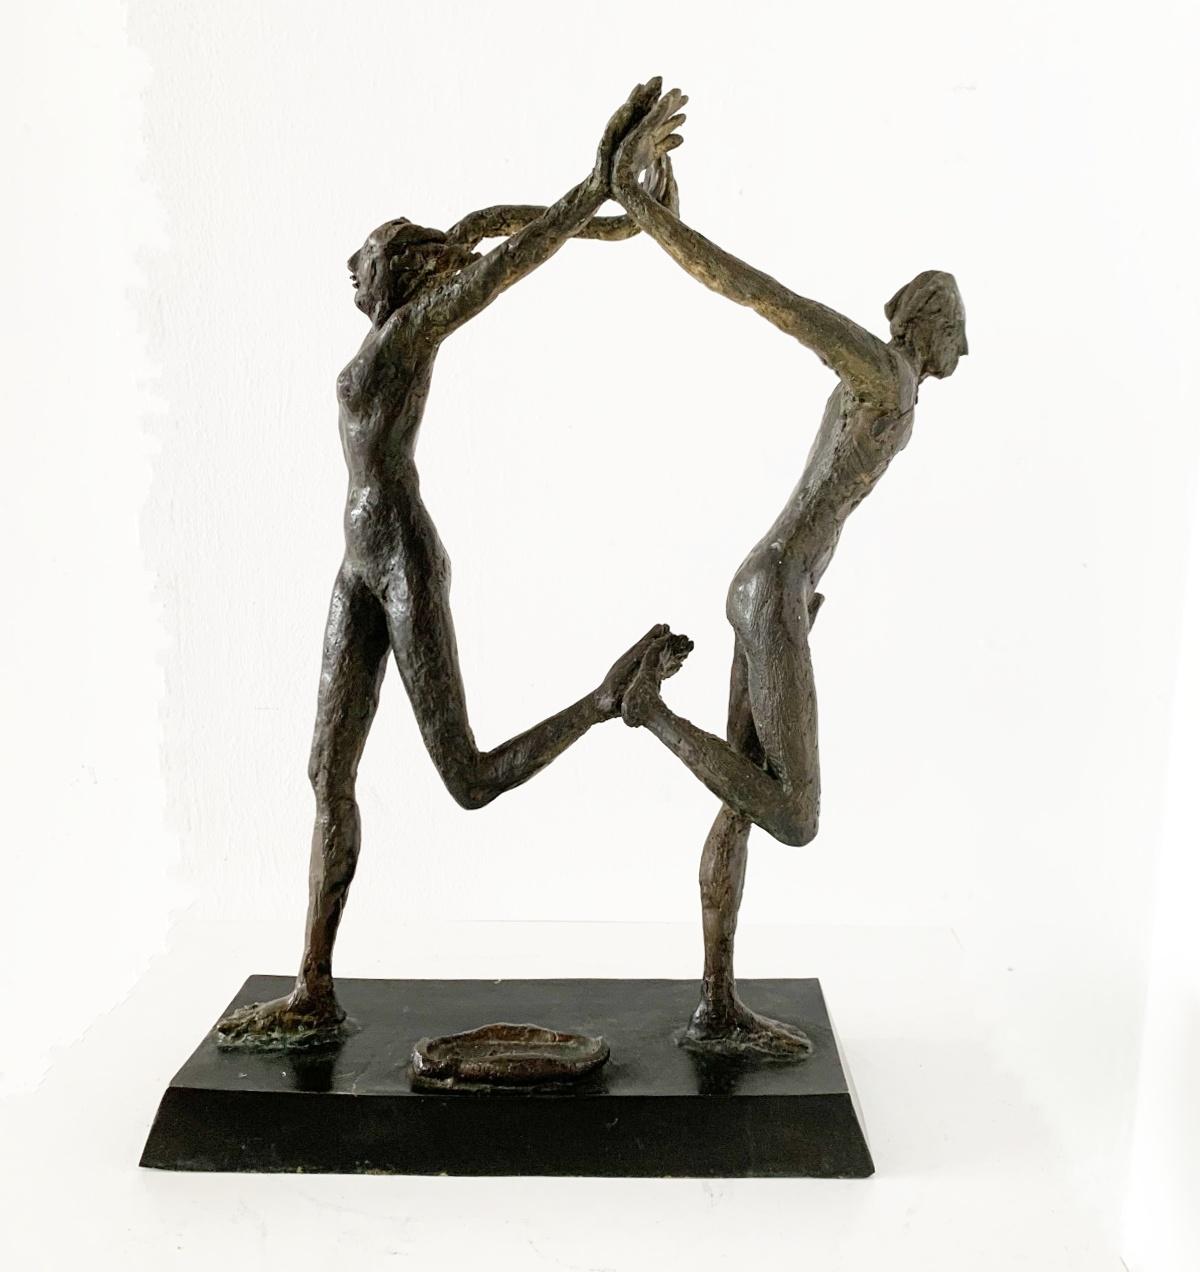 Figurative Sculpture Giuseppe del Debbio - Danser ensemble. Sculpture figurative contemporaine en bronze, artiste italien